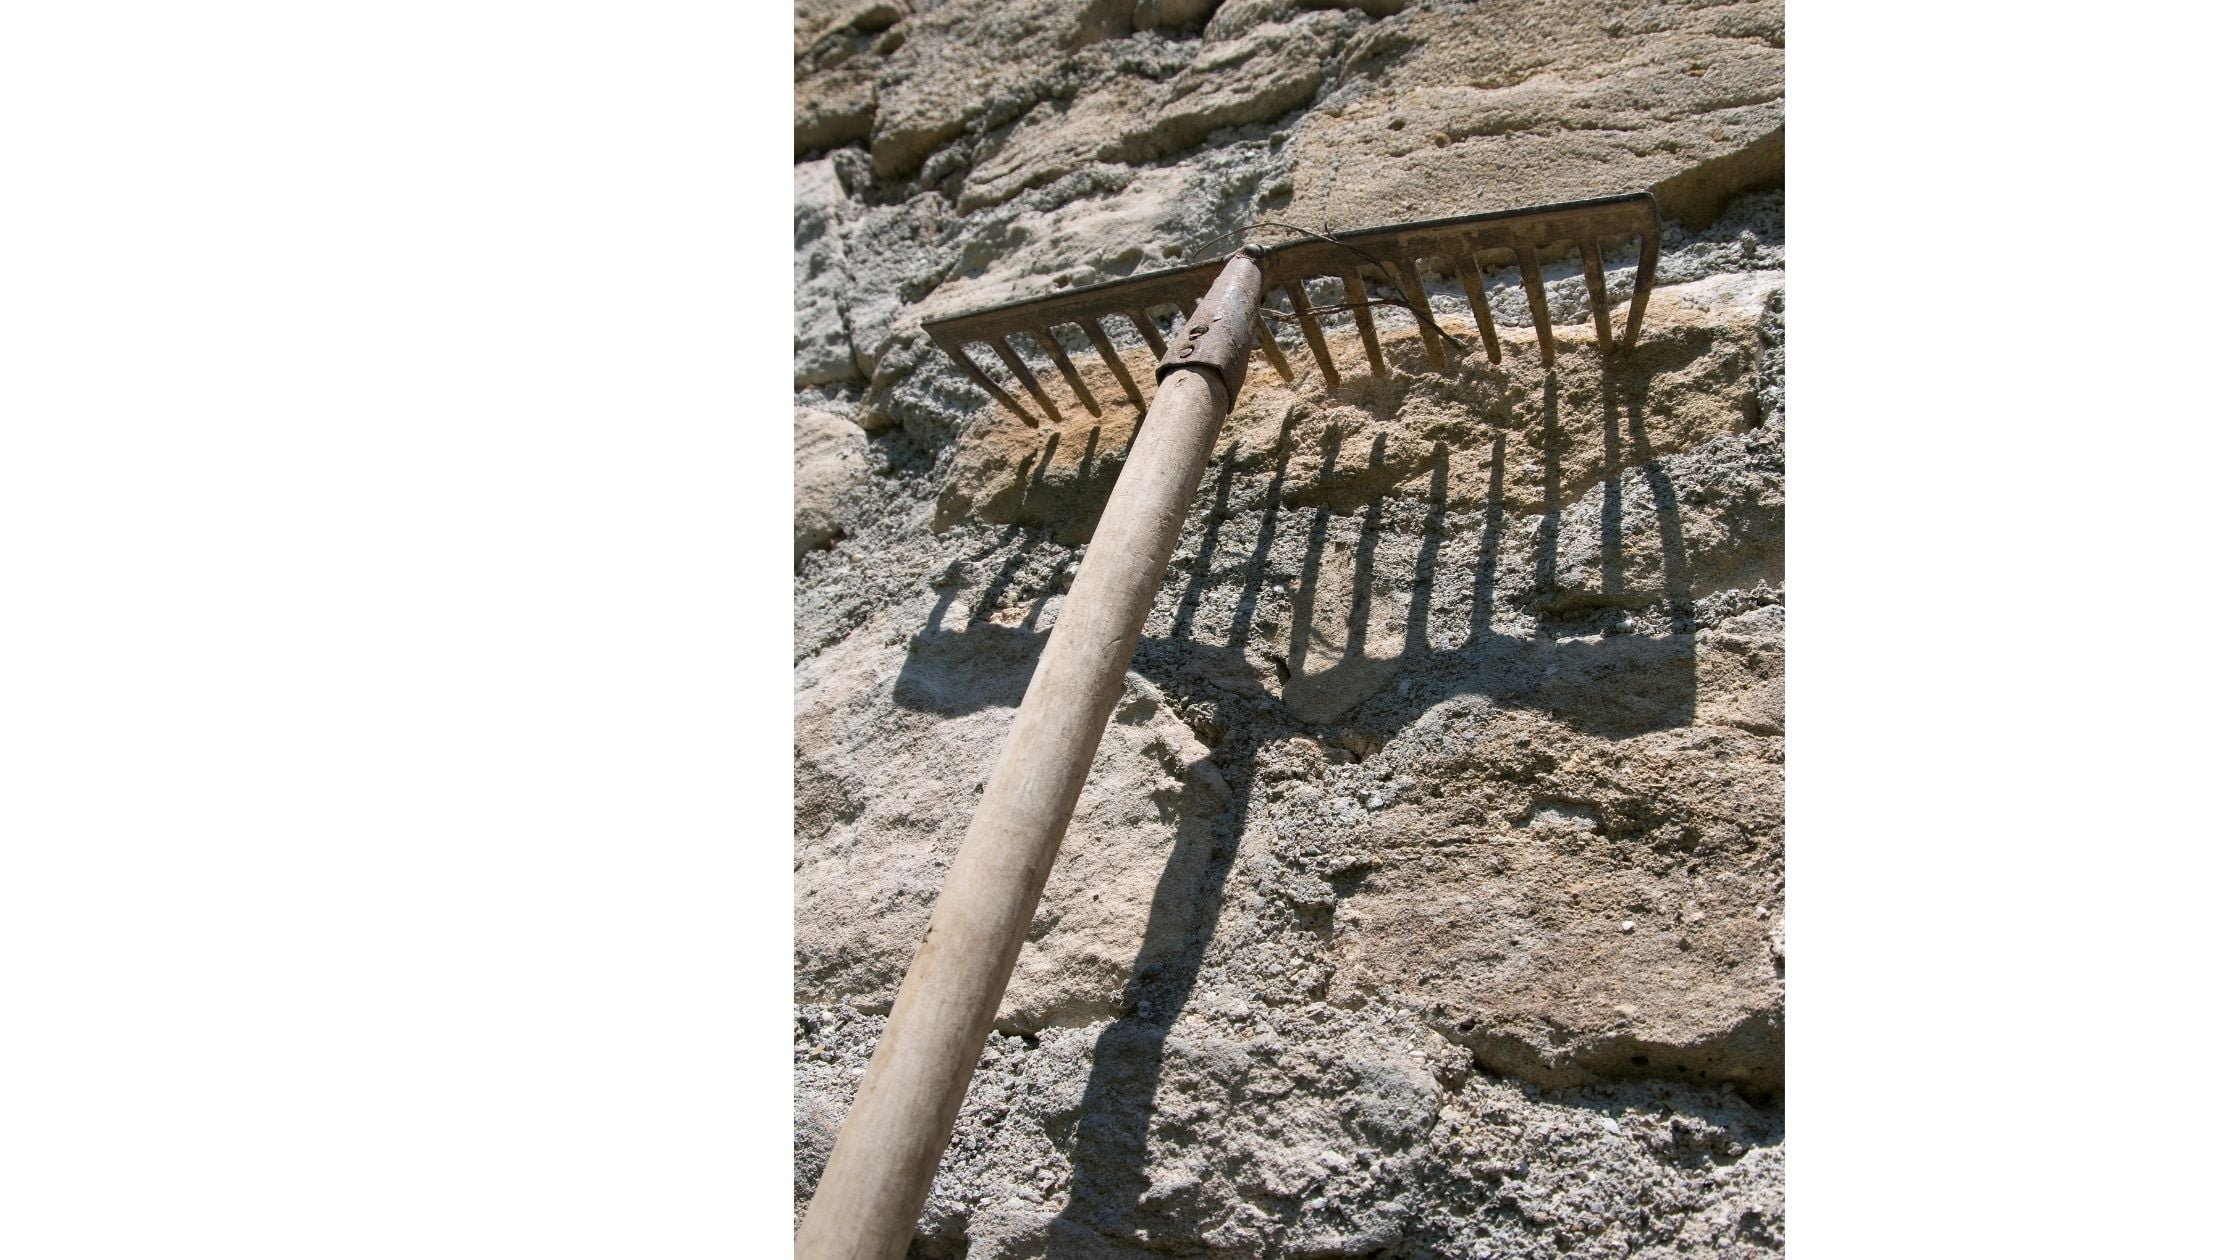 Types of Rakes: stone rake